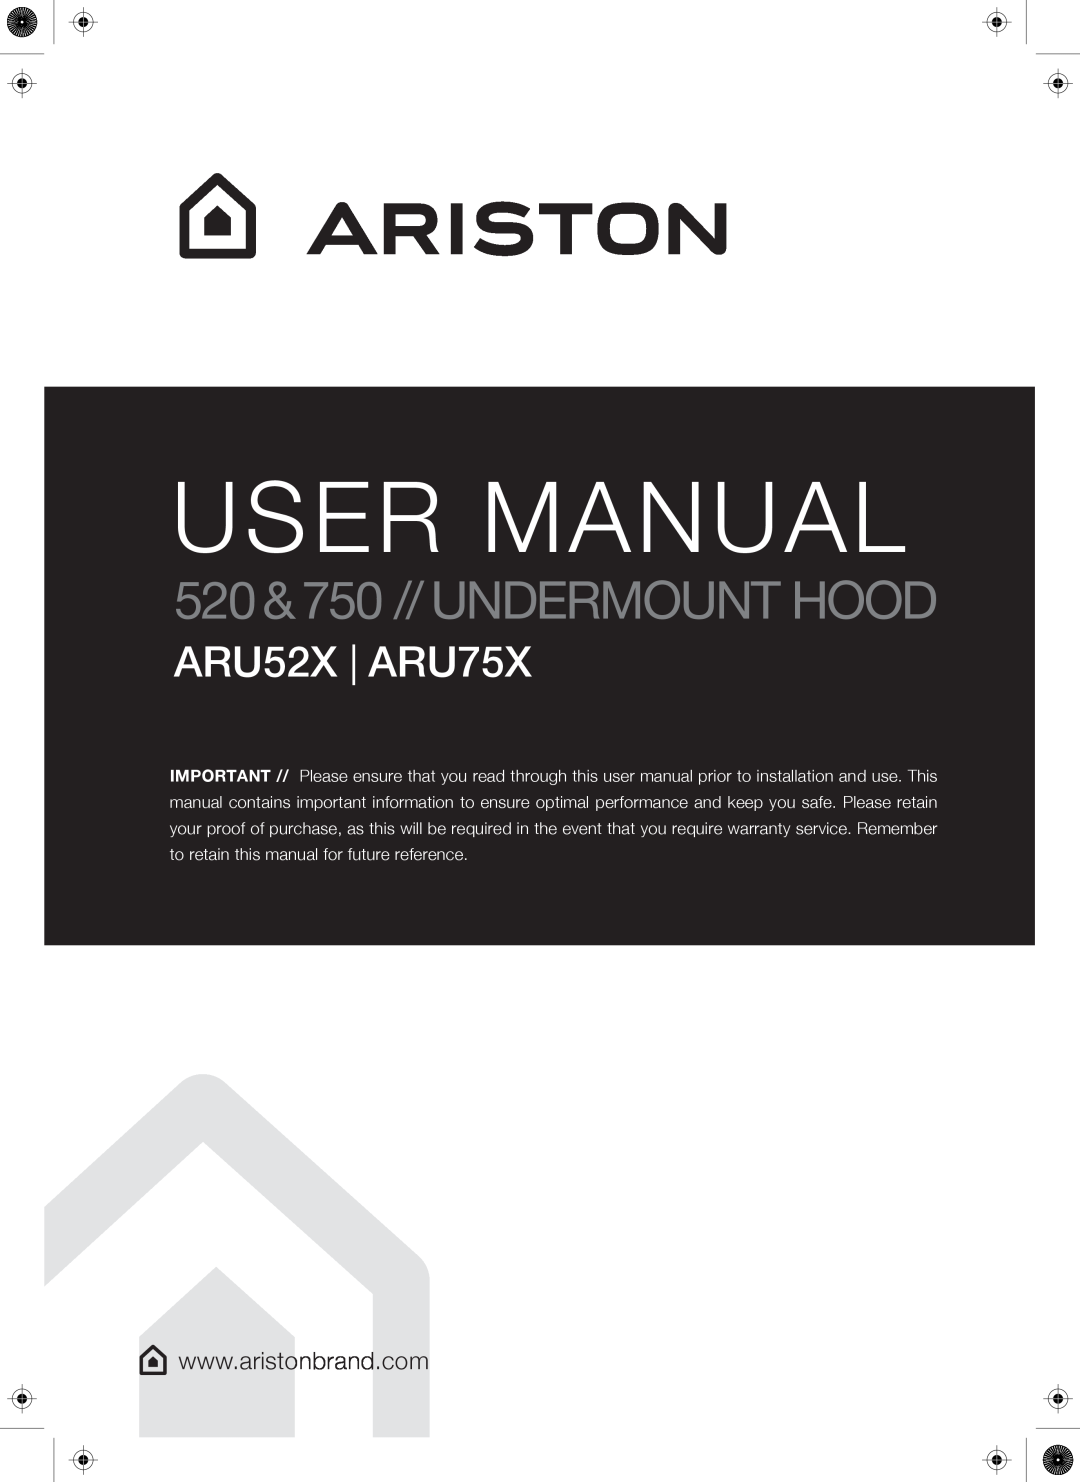 Ariston user manual User Manual, 520&750 // UNDERMOUNT HOOD, ARU52X ARU75X 